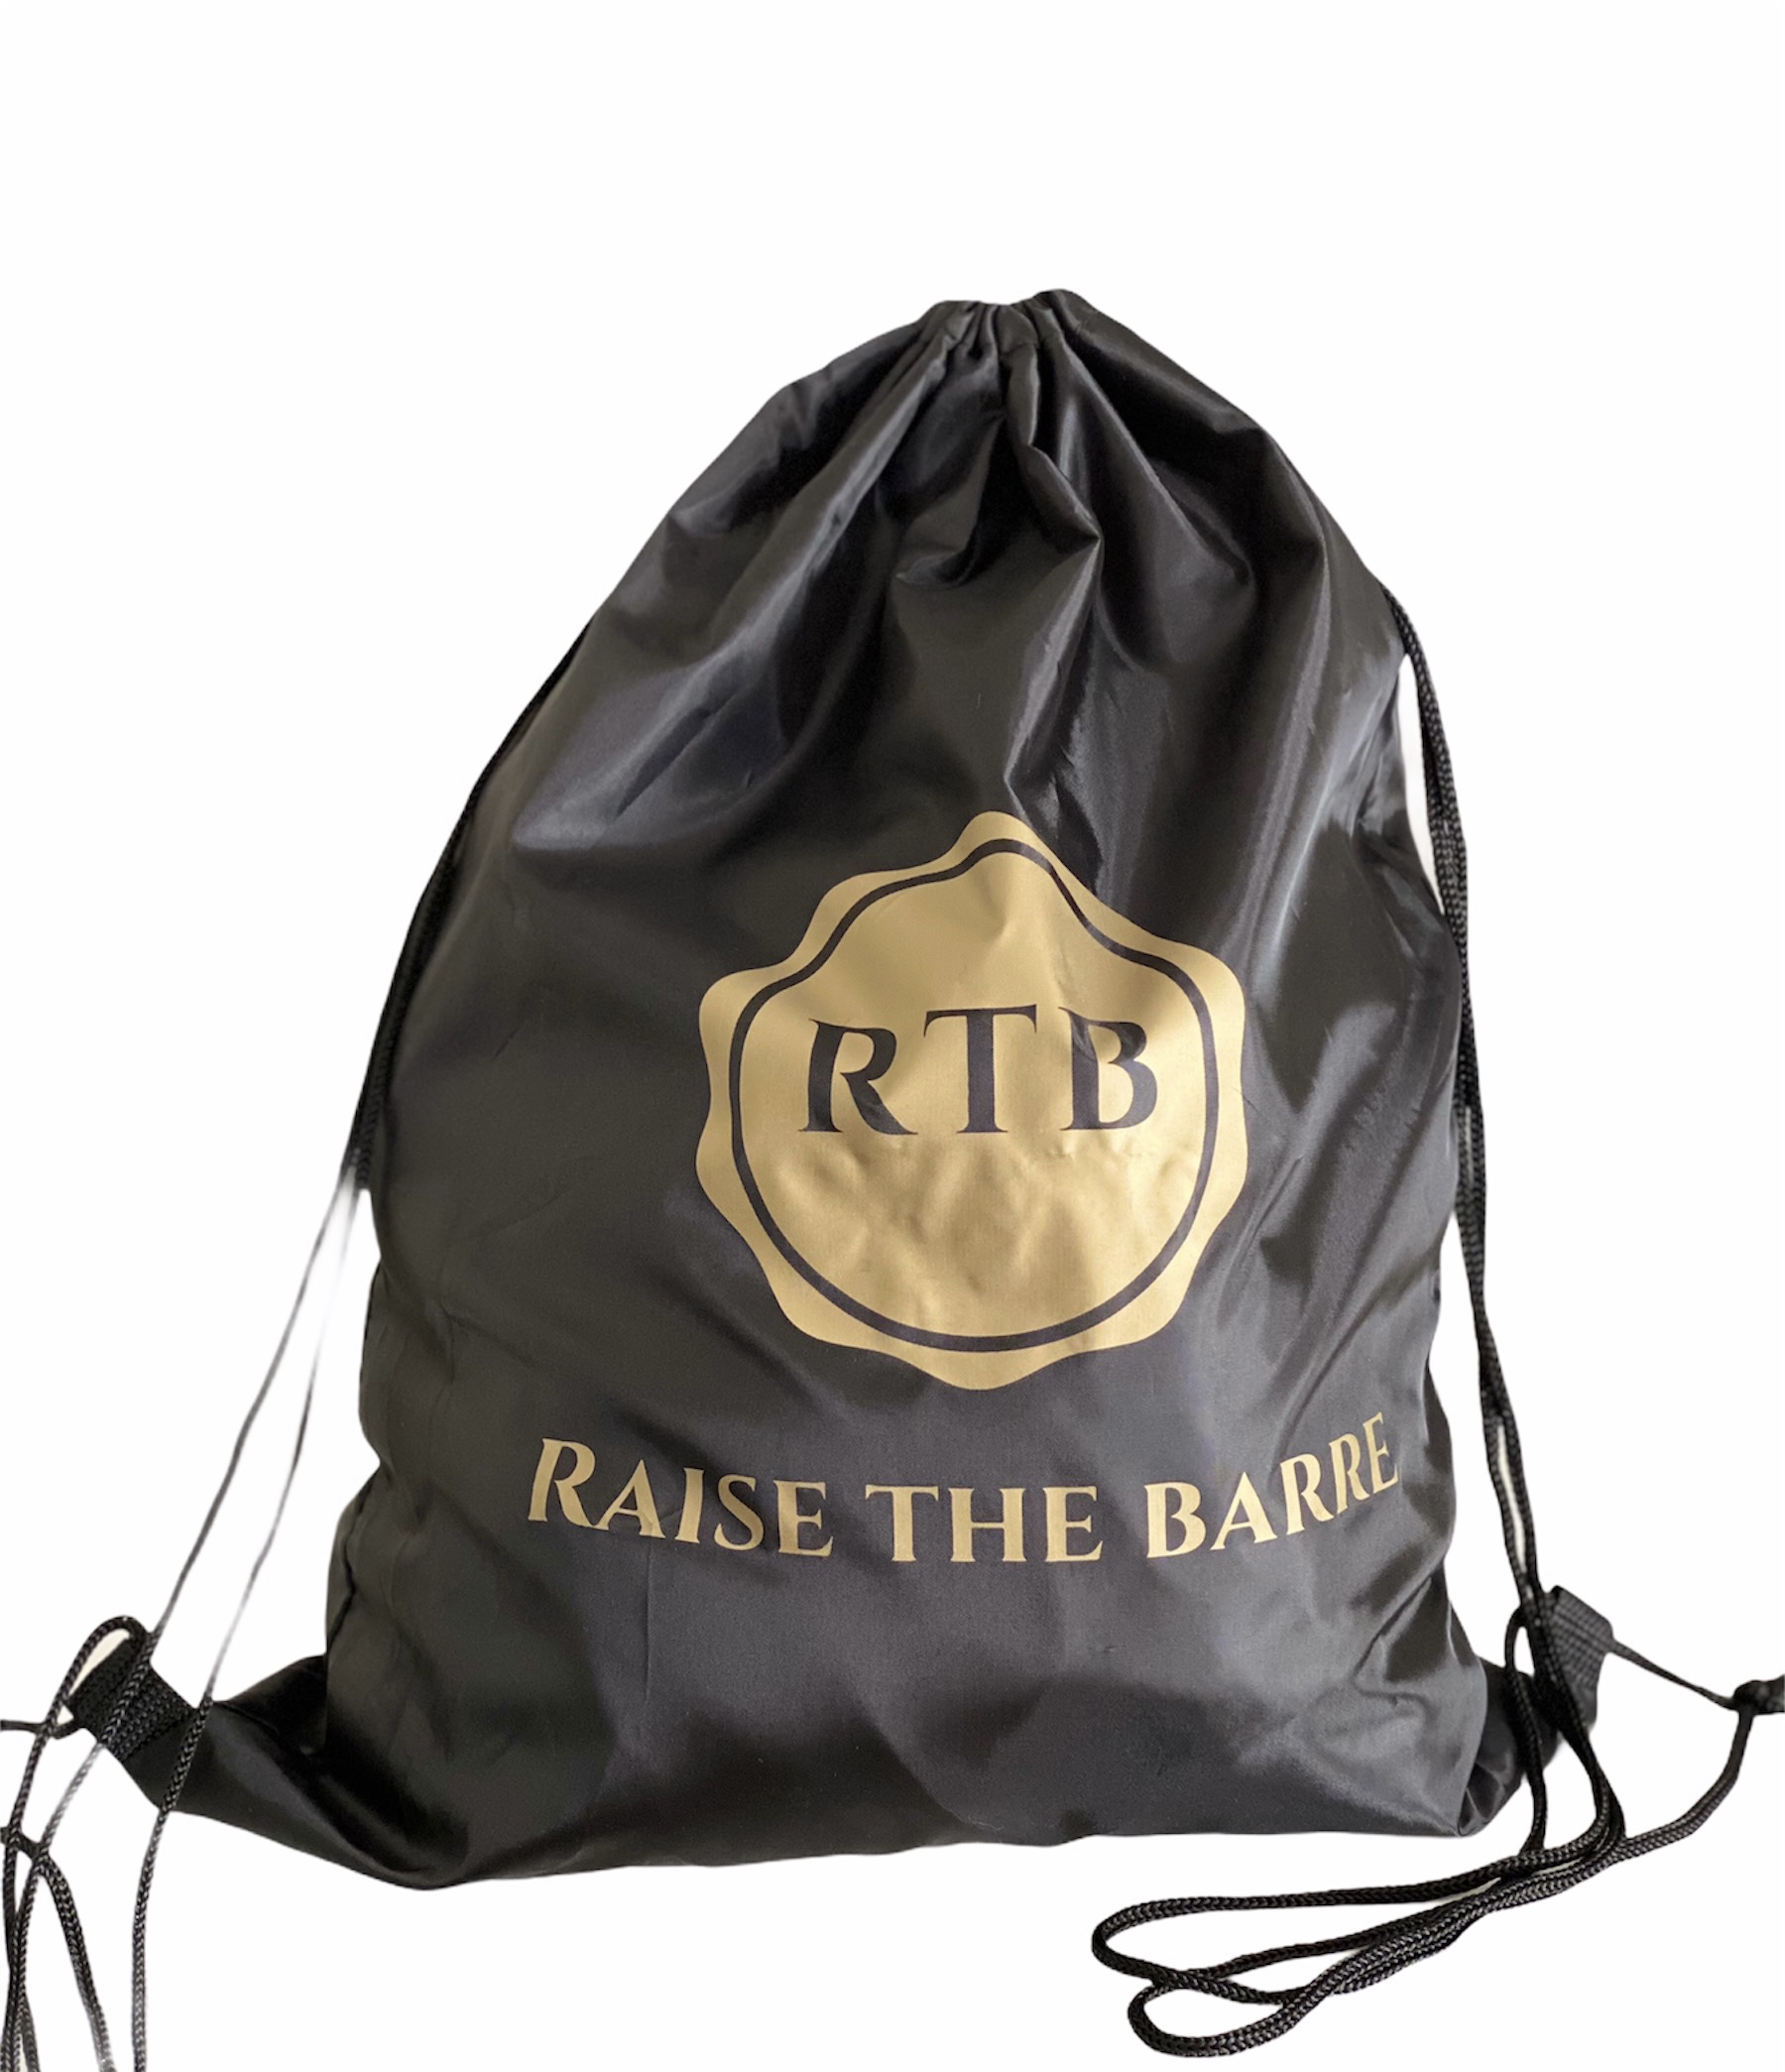 Raise the Barre Gym Bag – Raise The Barre